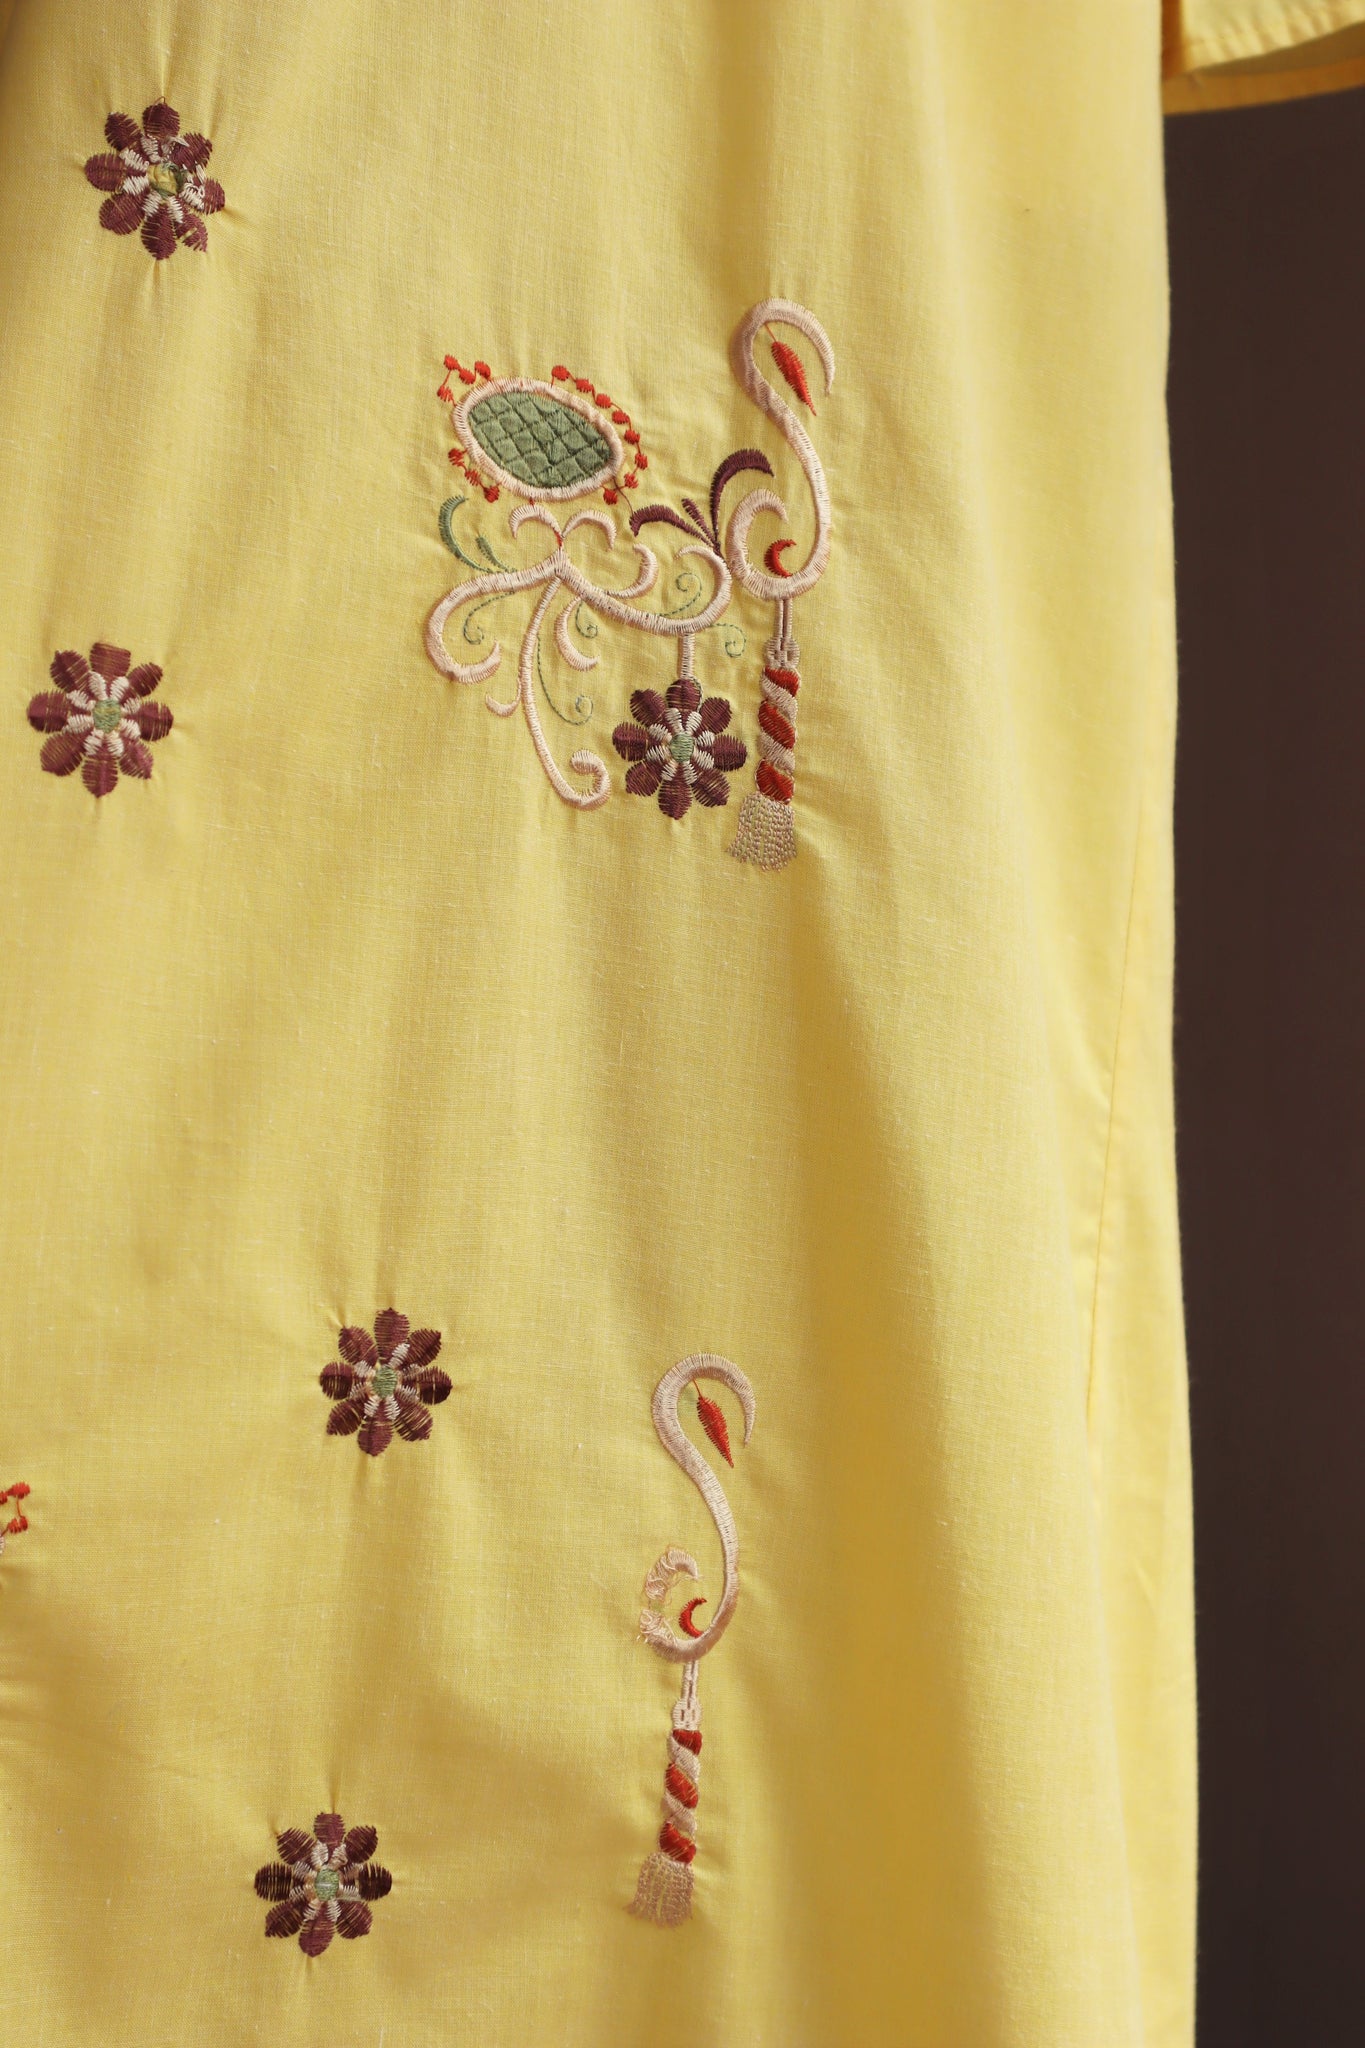 70s Exotic Yellow BOHO Dress